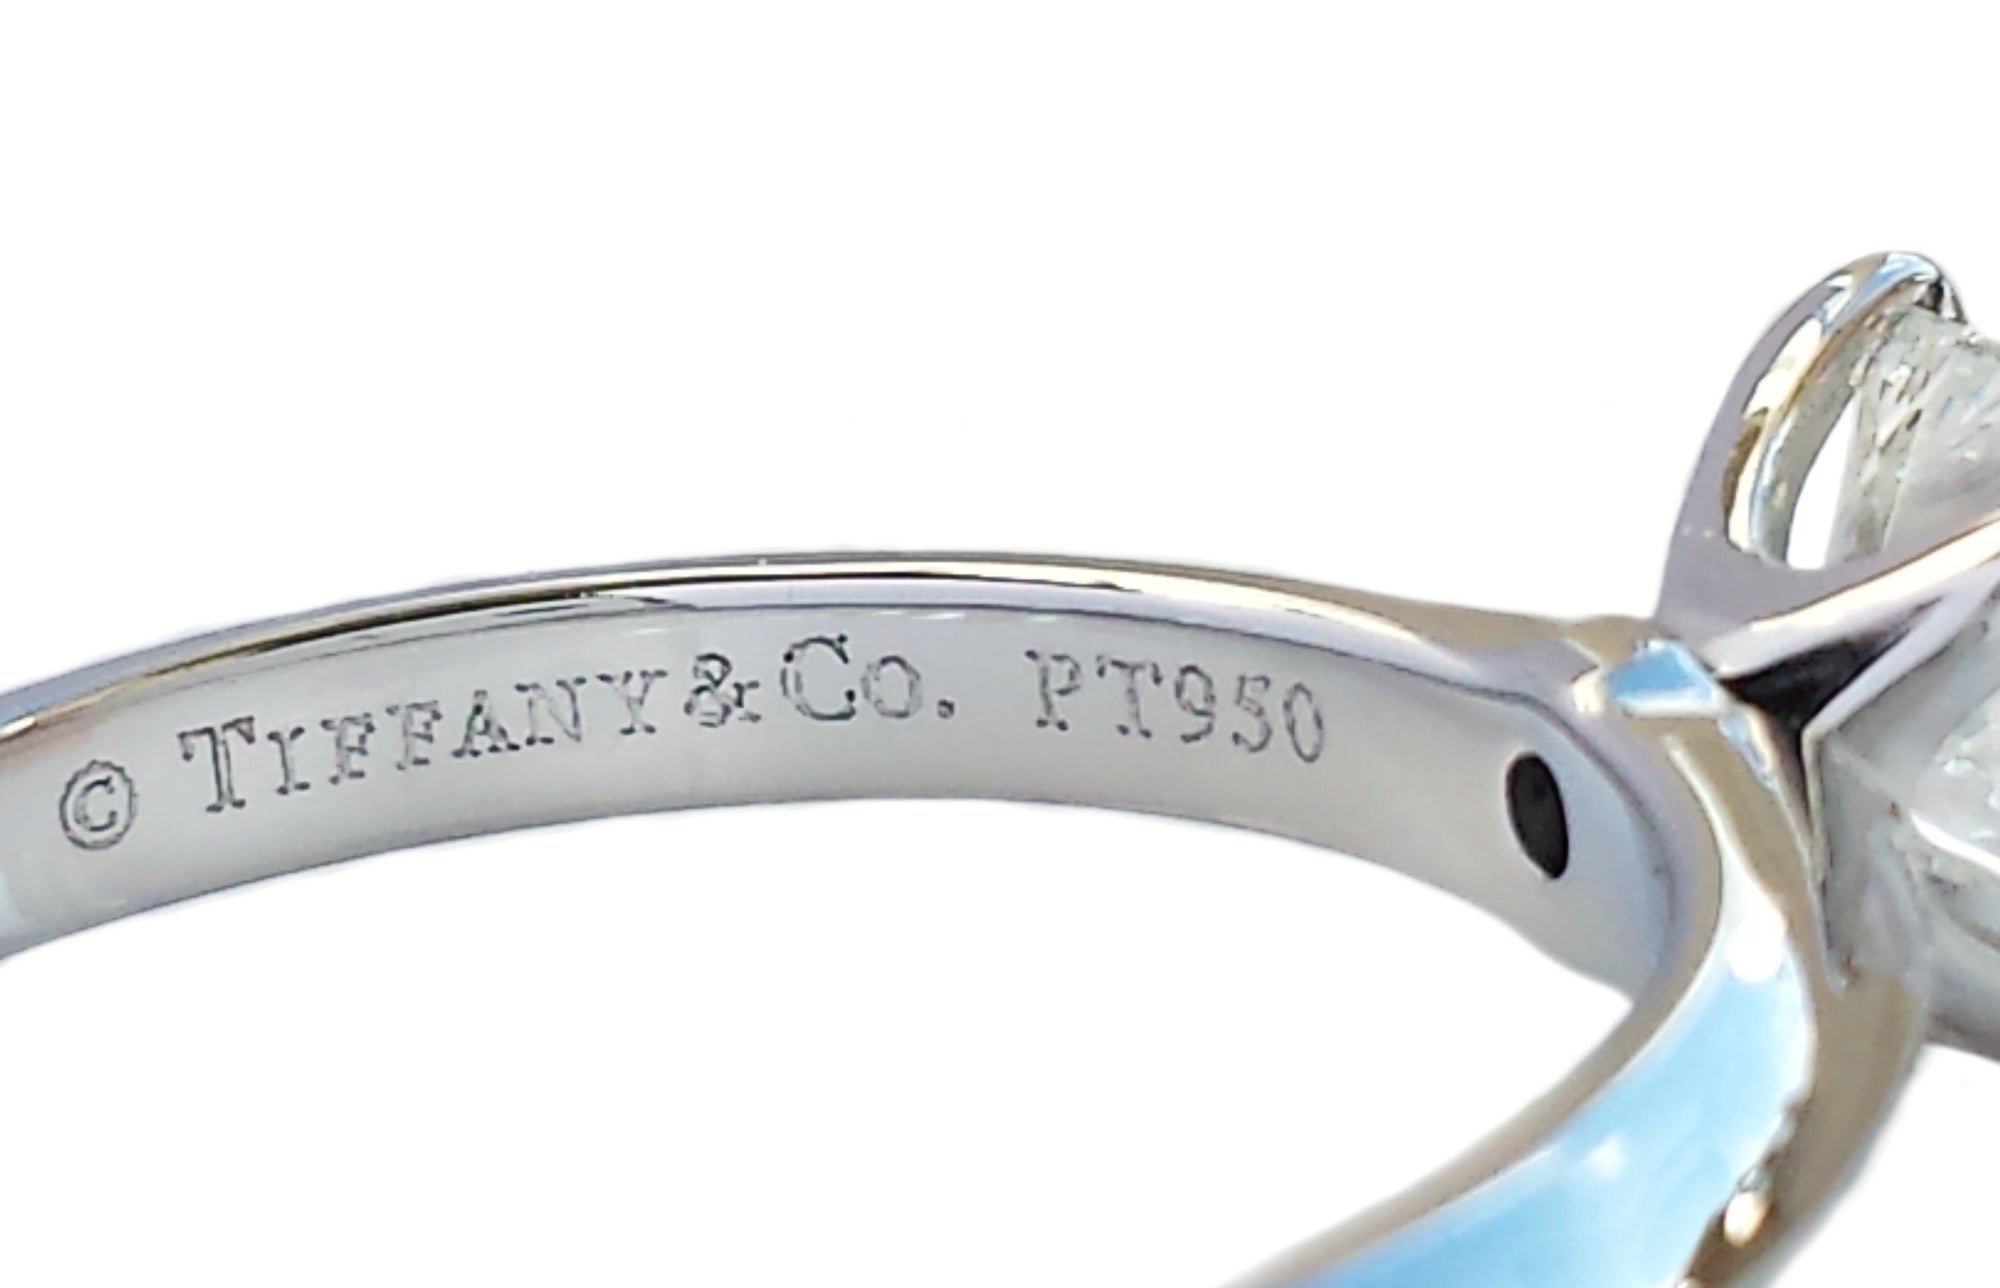 Tiffany & Co. 0.66ct H/VVS2 Princess Cut Diamond Engagement Ring